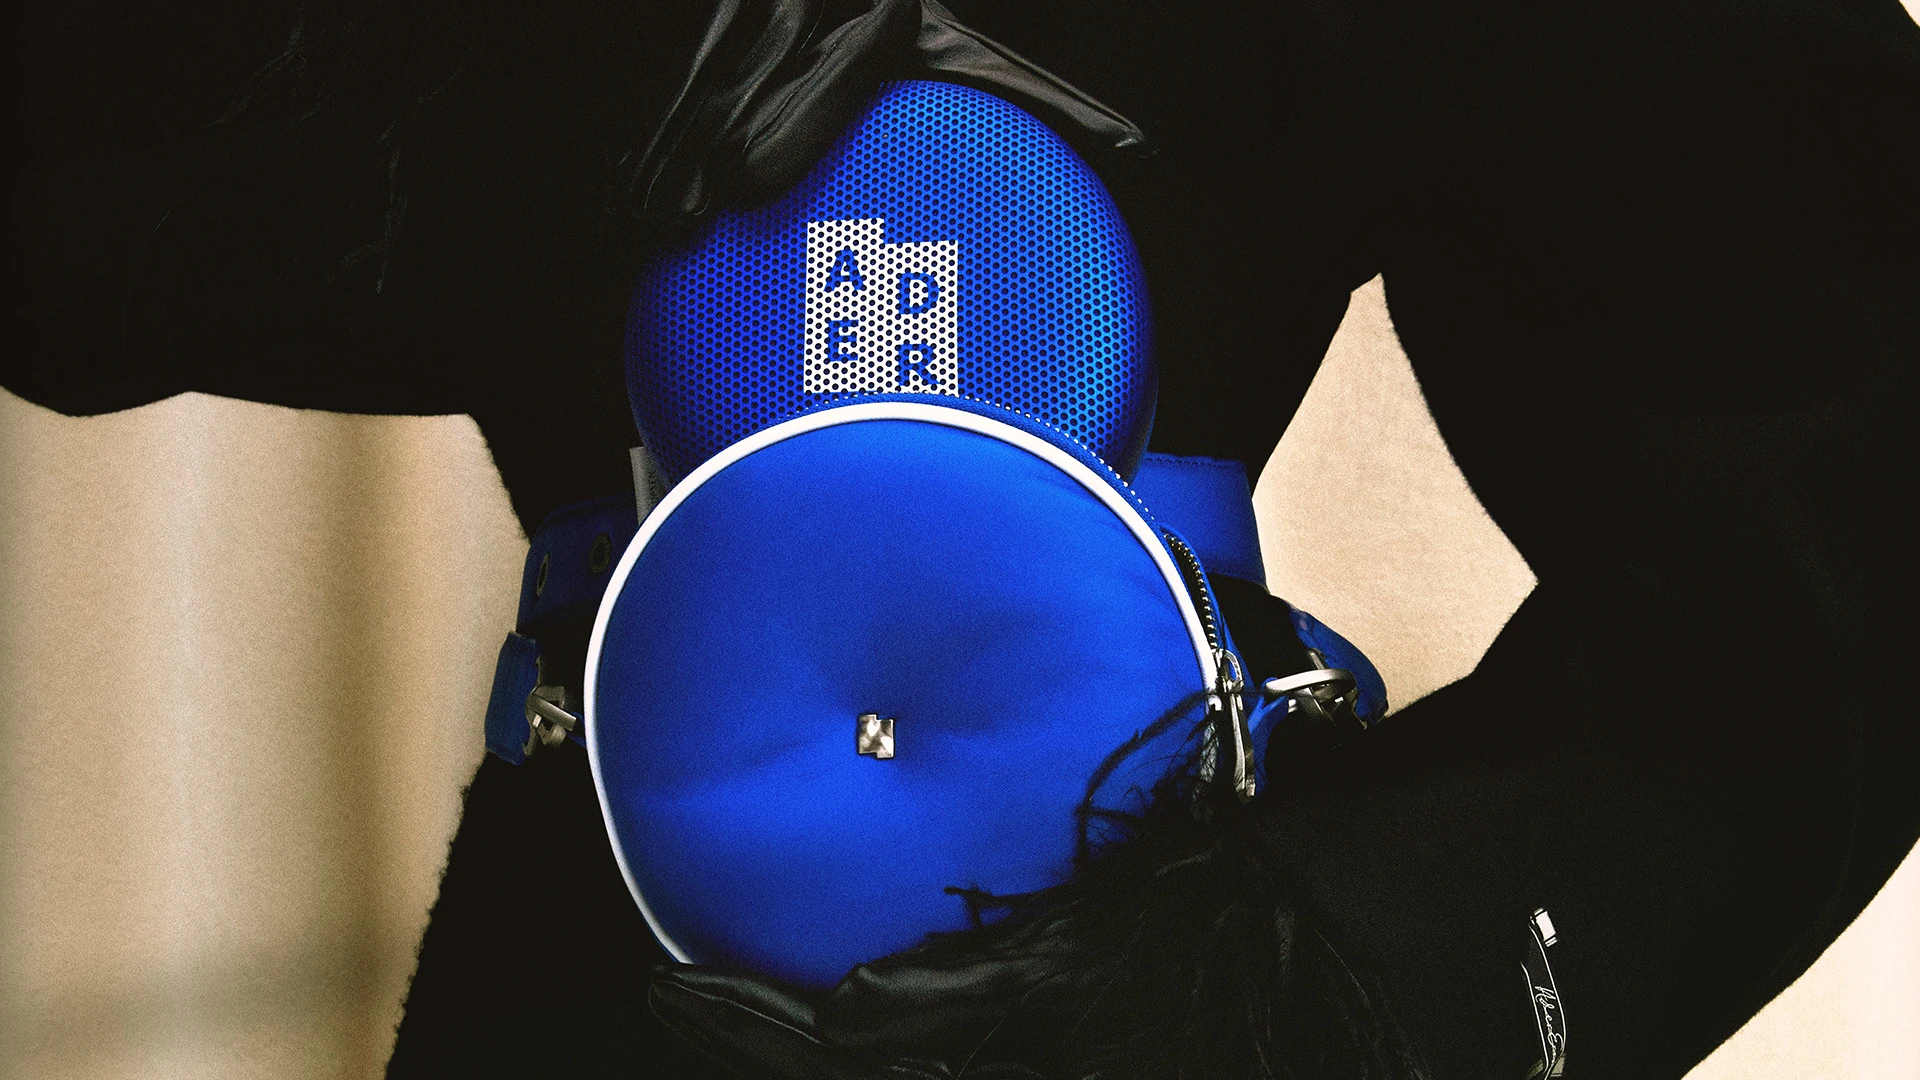 Ader Error speaker bag Image worn on the waist